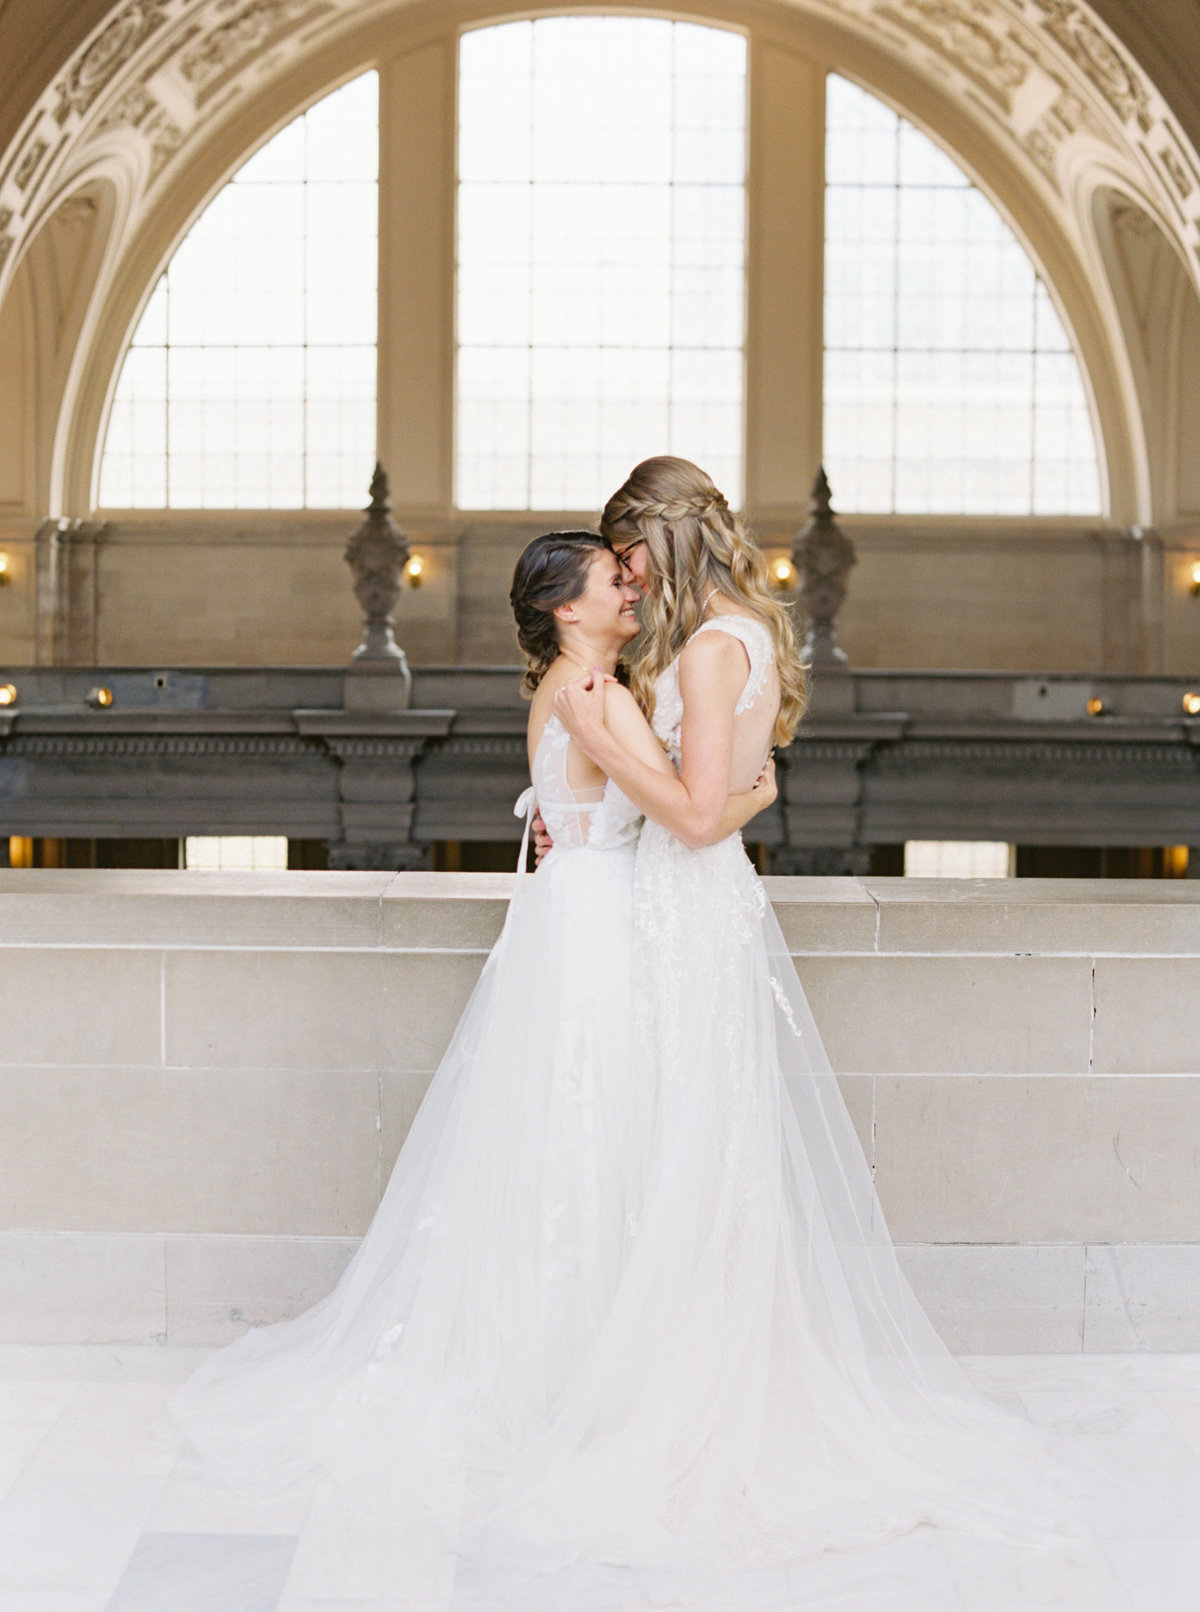 Bri + Adrianna San Francisco City Hall Wedding | Cassie Valente Photography 0045